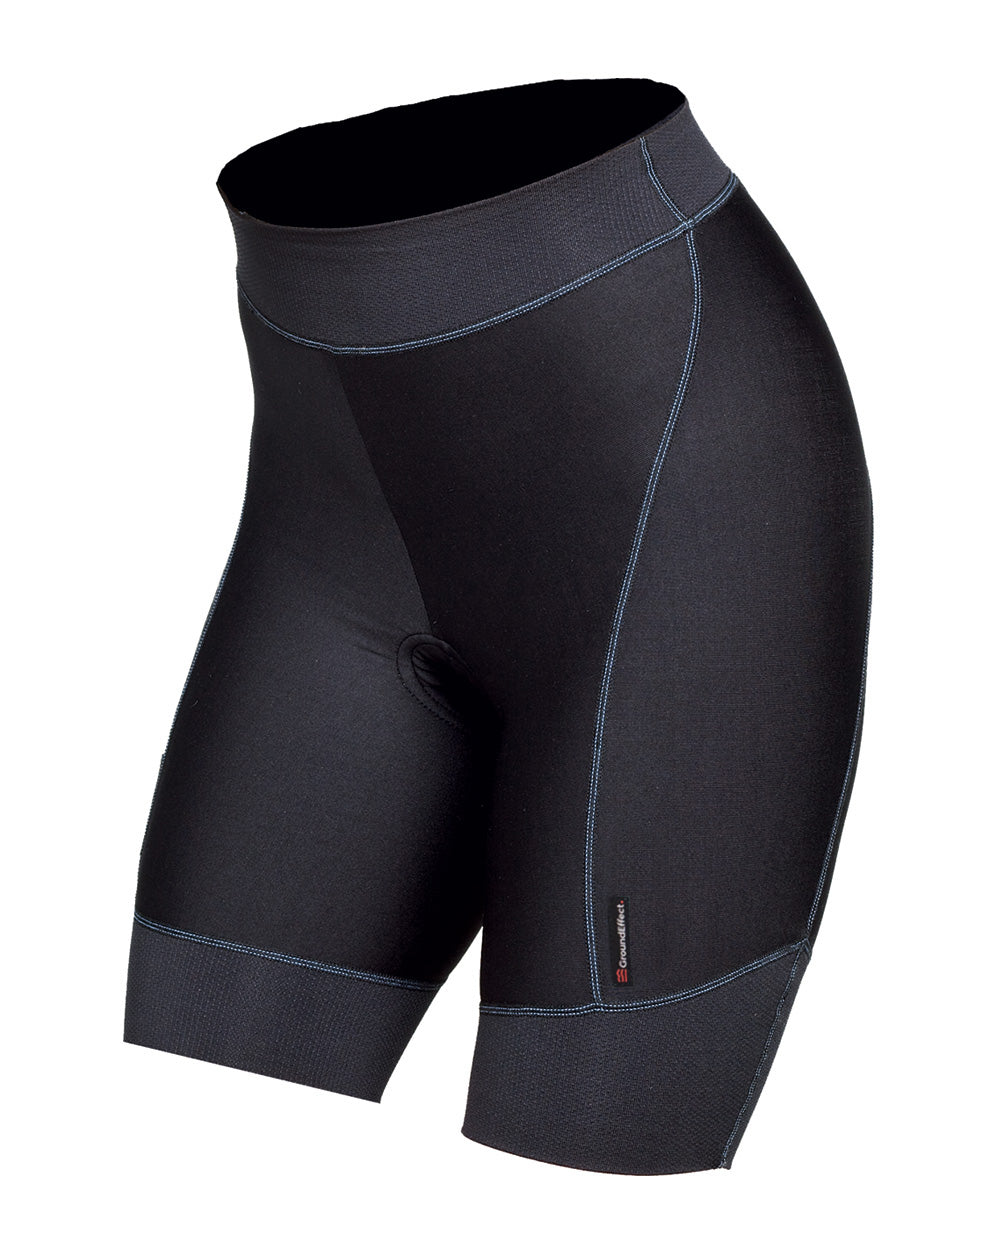 Ground Effect Mojos - women's nylon lycra cycle shorts